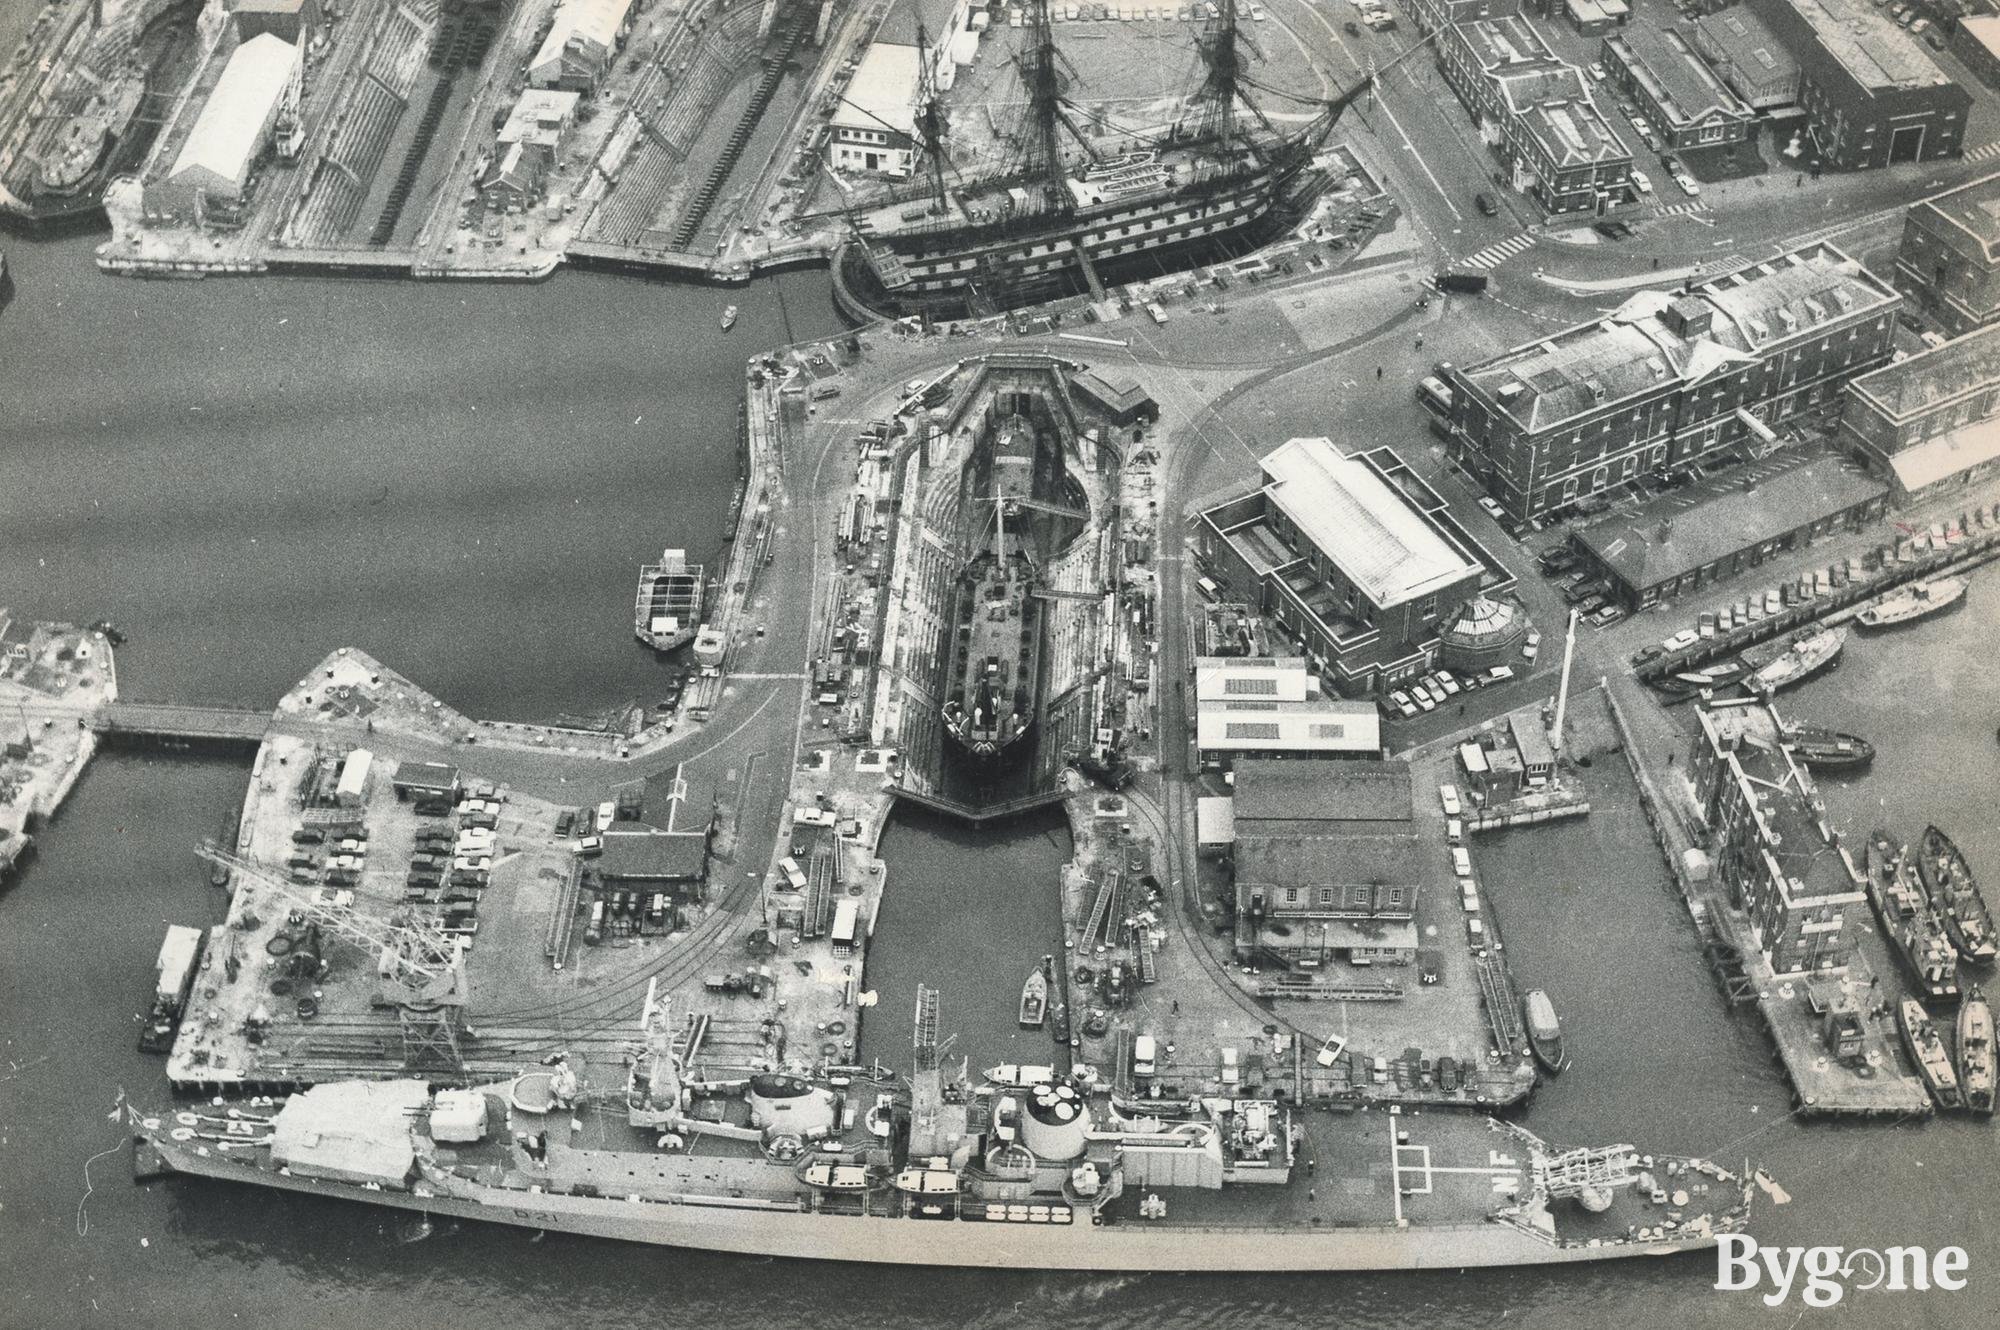 Dockyard, 1970